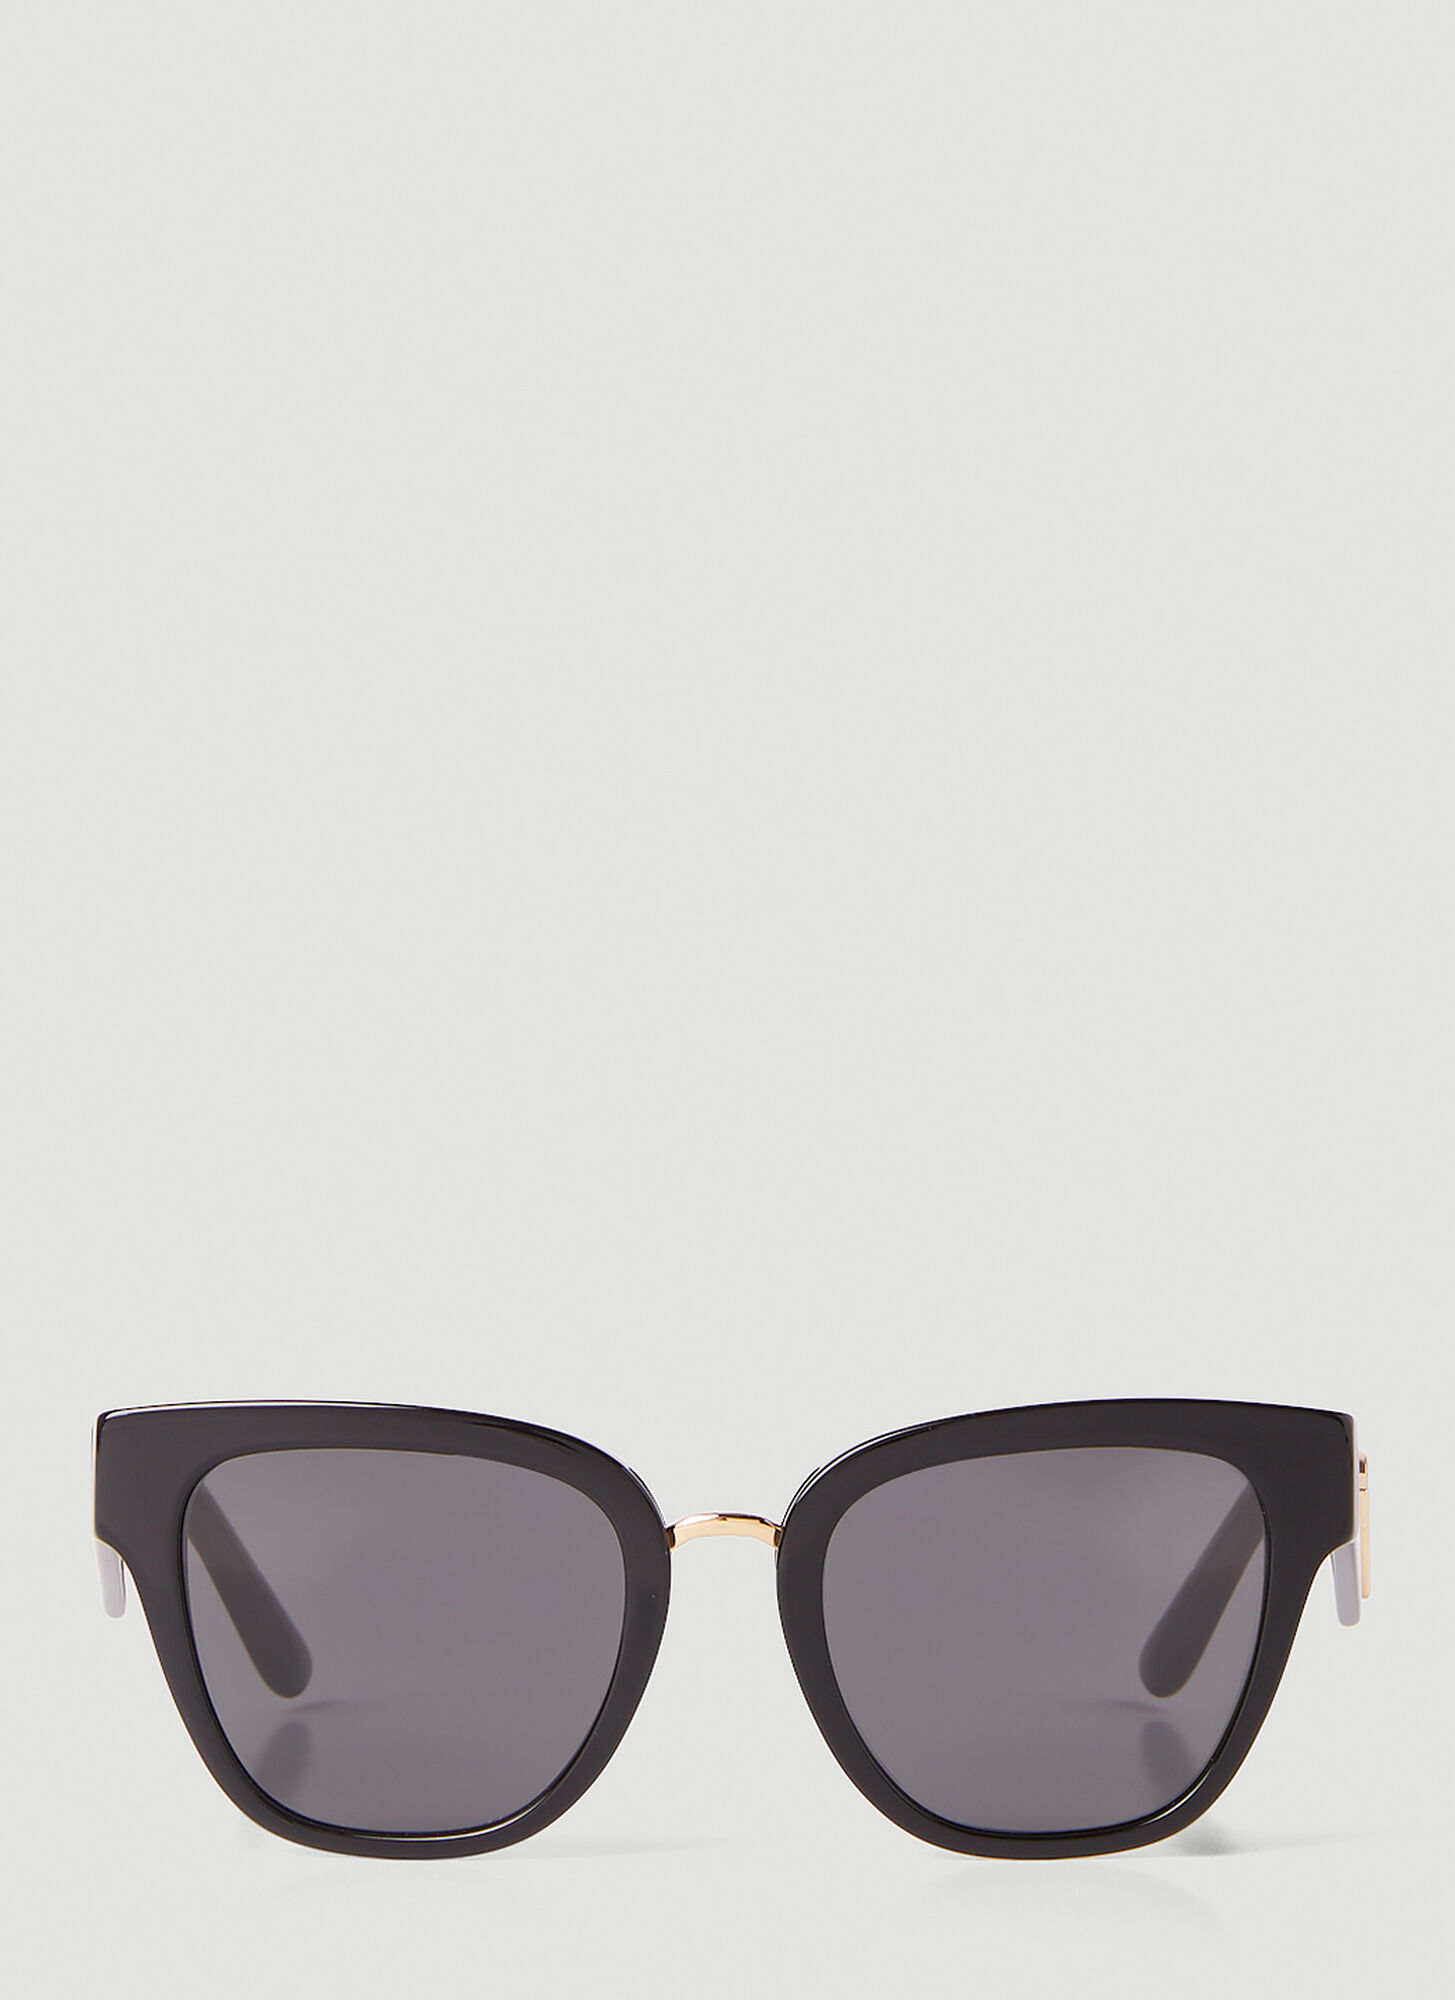 Dolce & Gabbana Crossed Sunglasses In Black